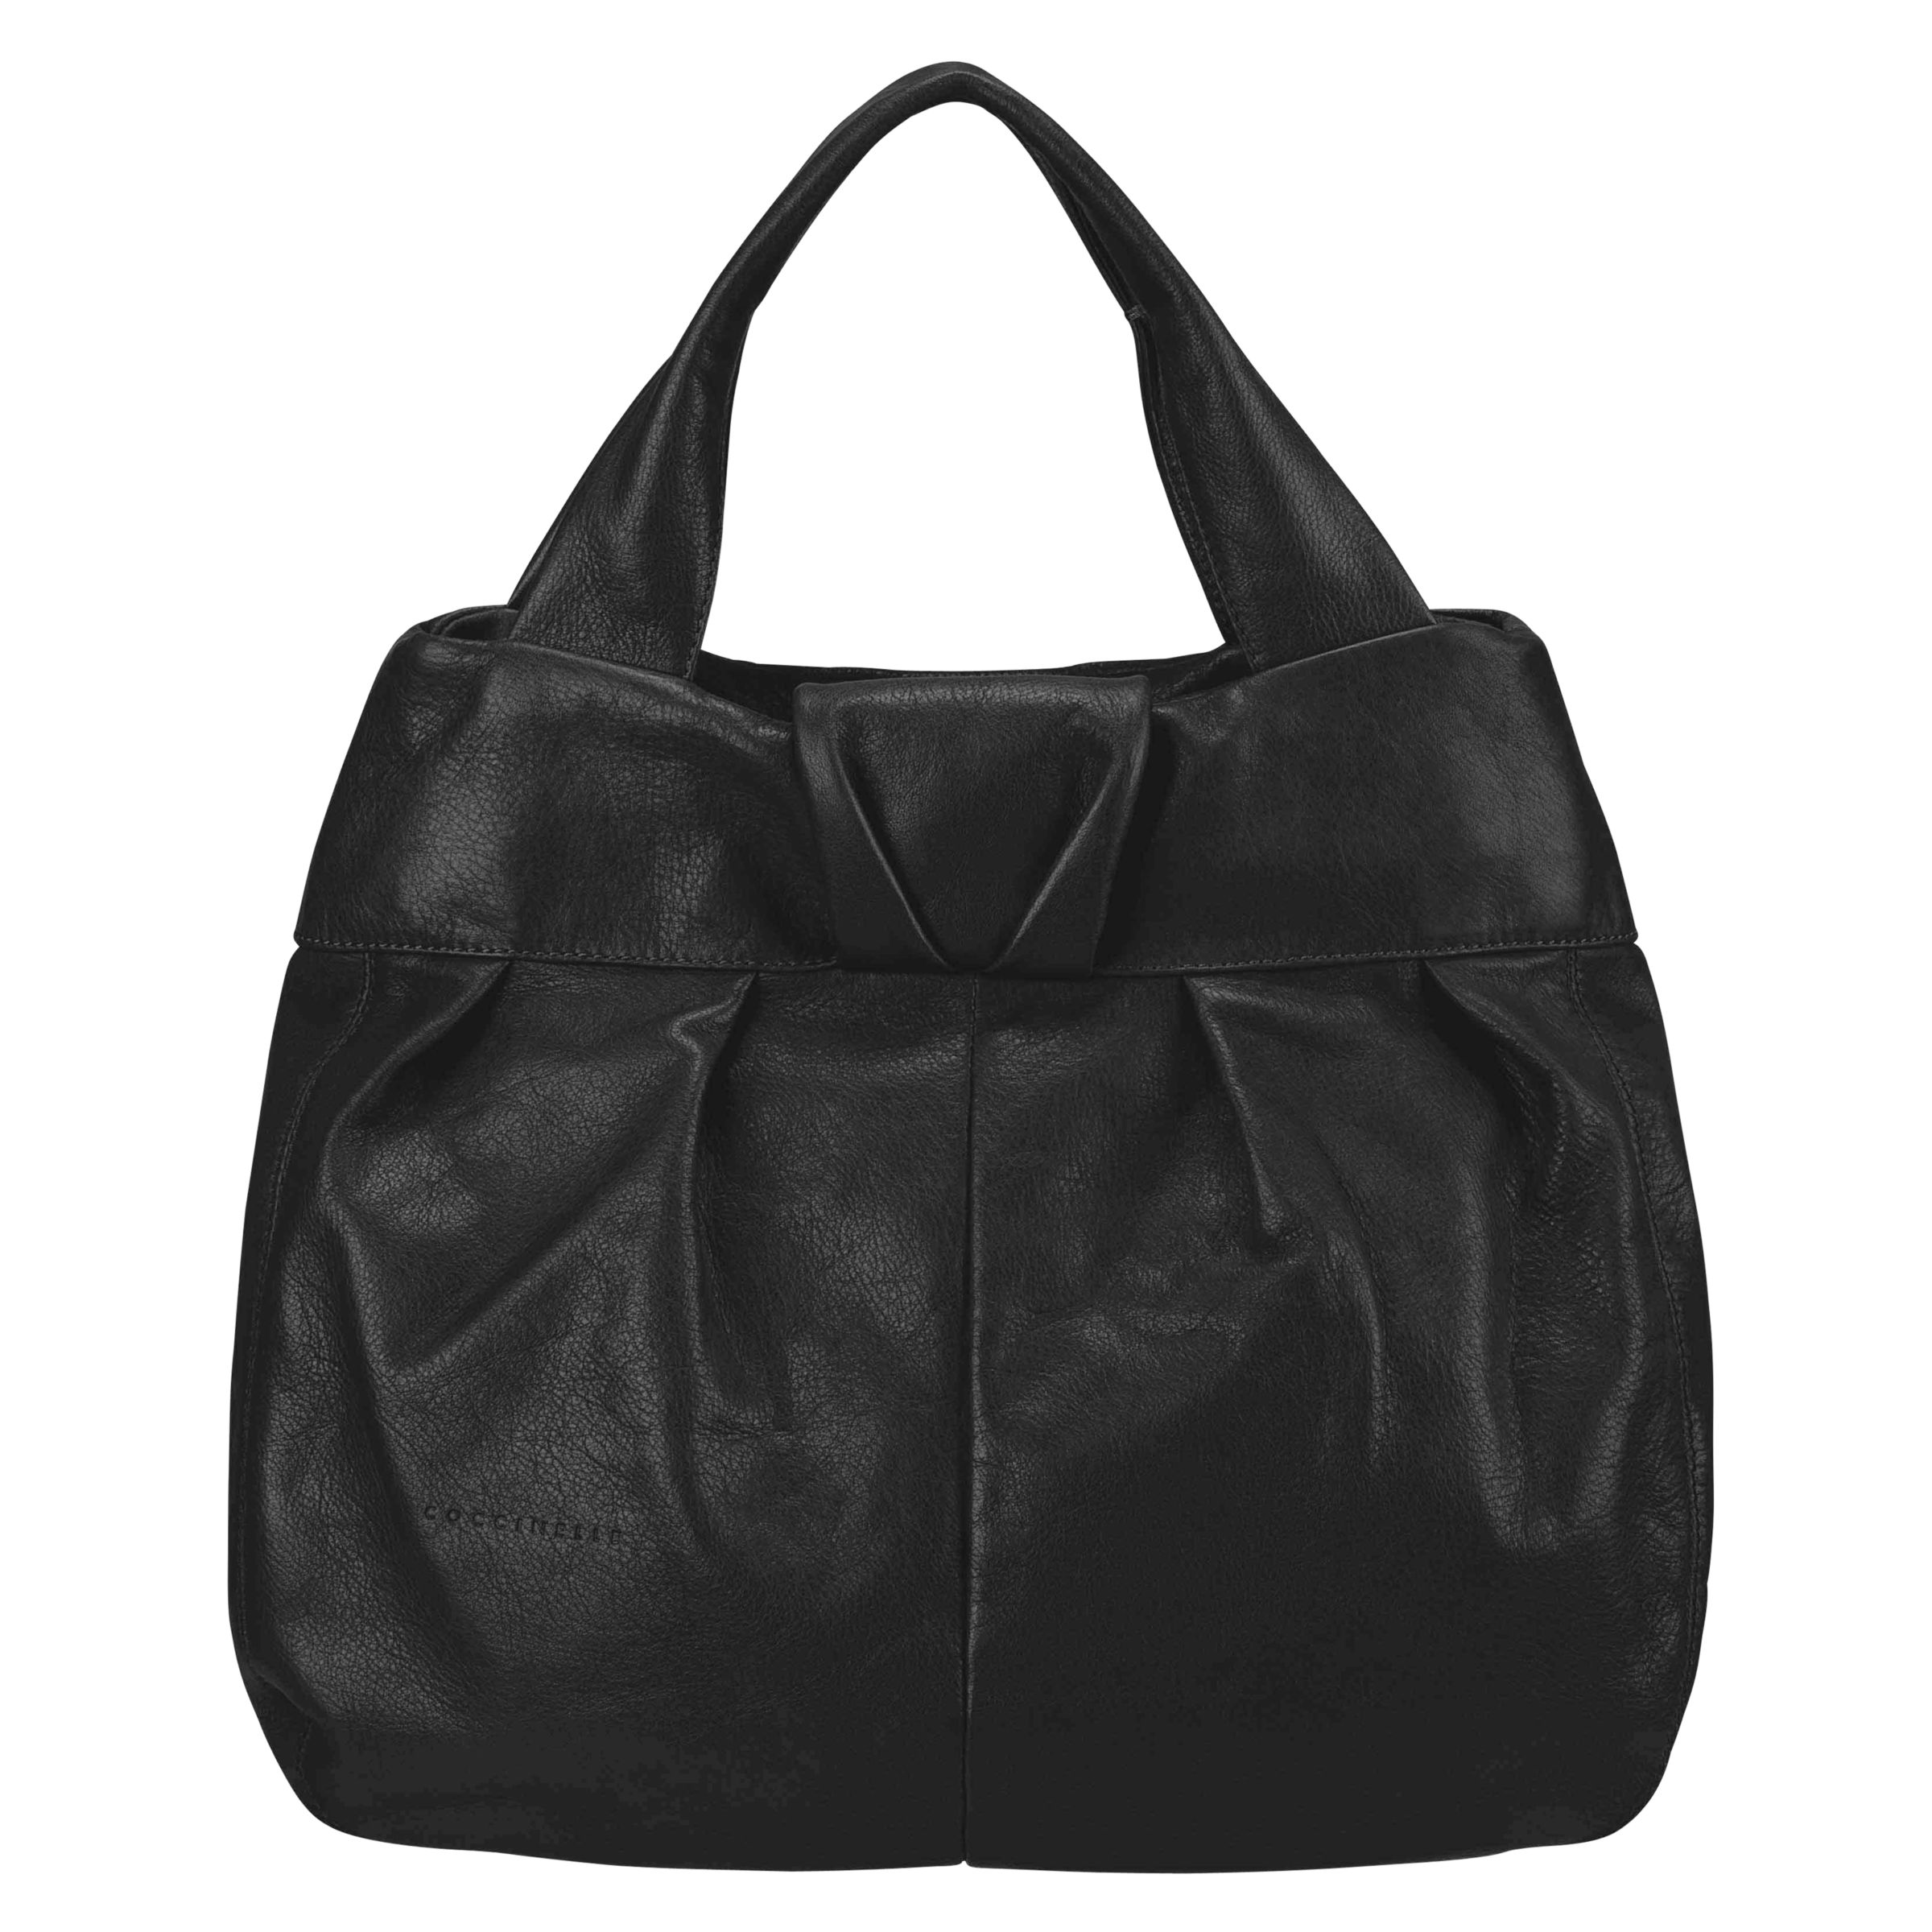 Coccinelle Beatrix Knot Leather Hobo Handbag, Black at John Lewis